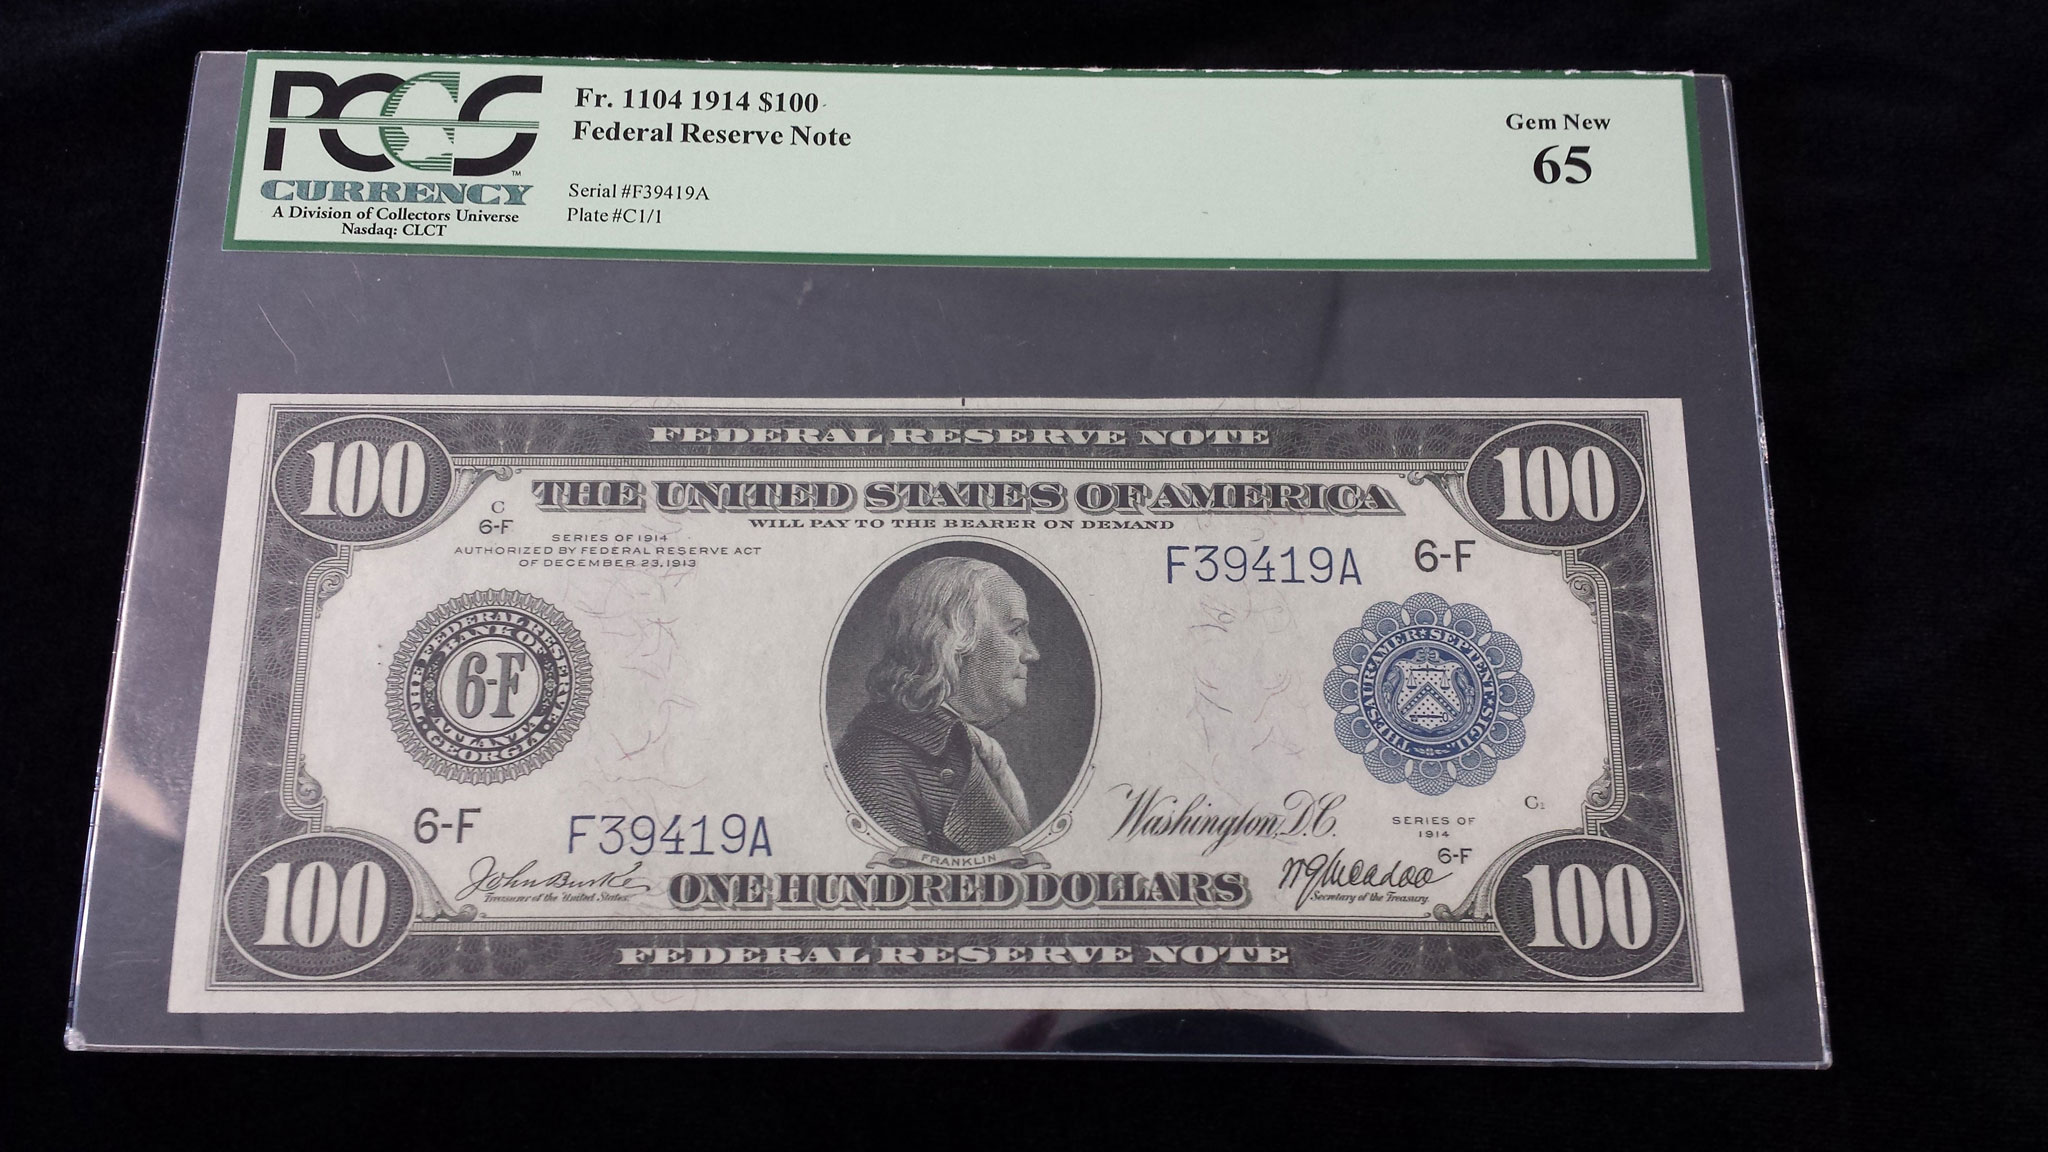 Federal Reserve Note $100 1914 Gem New 65 – SOLD